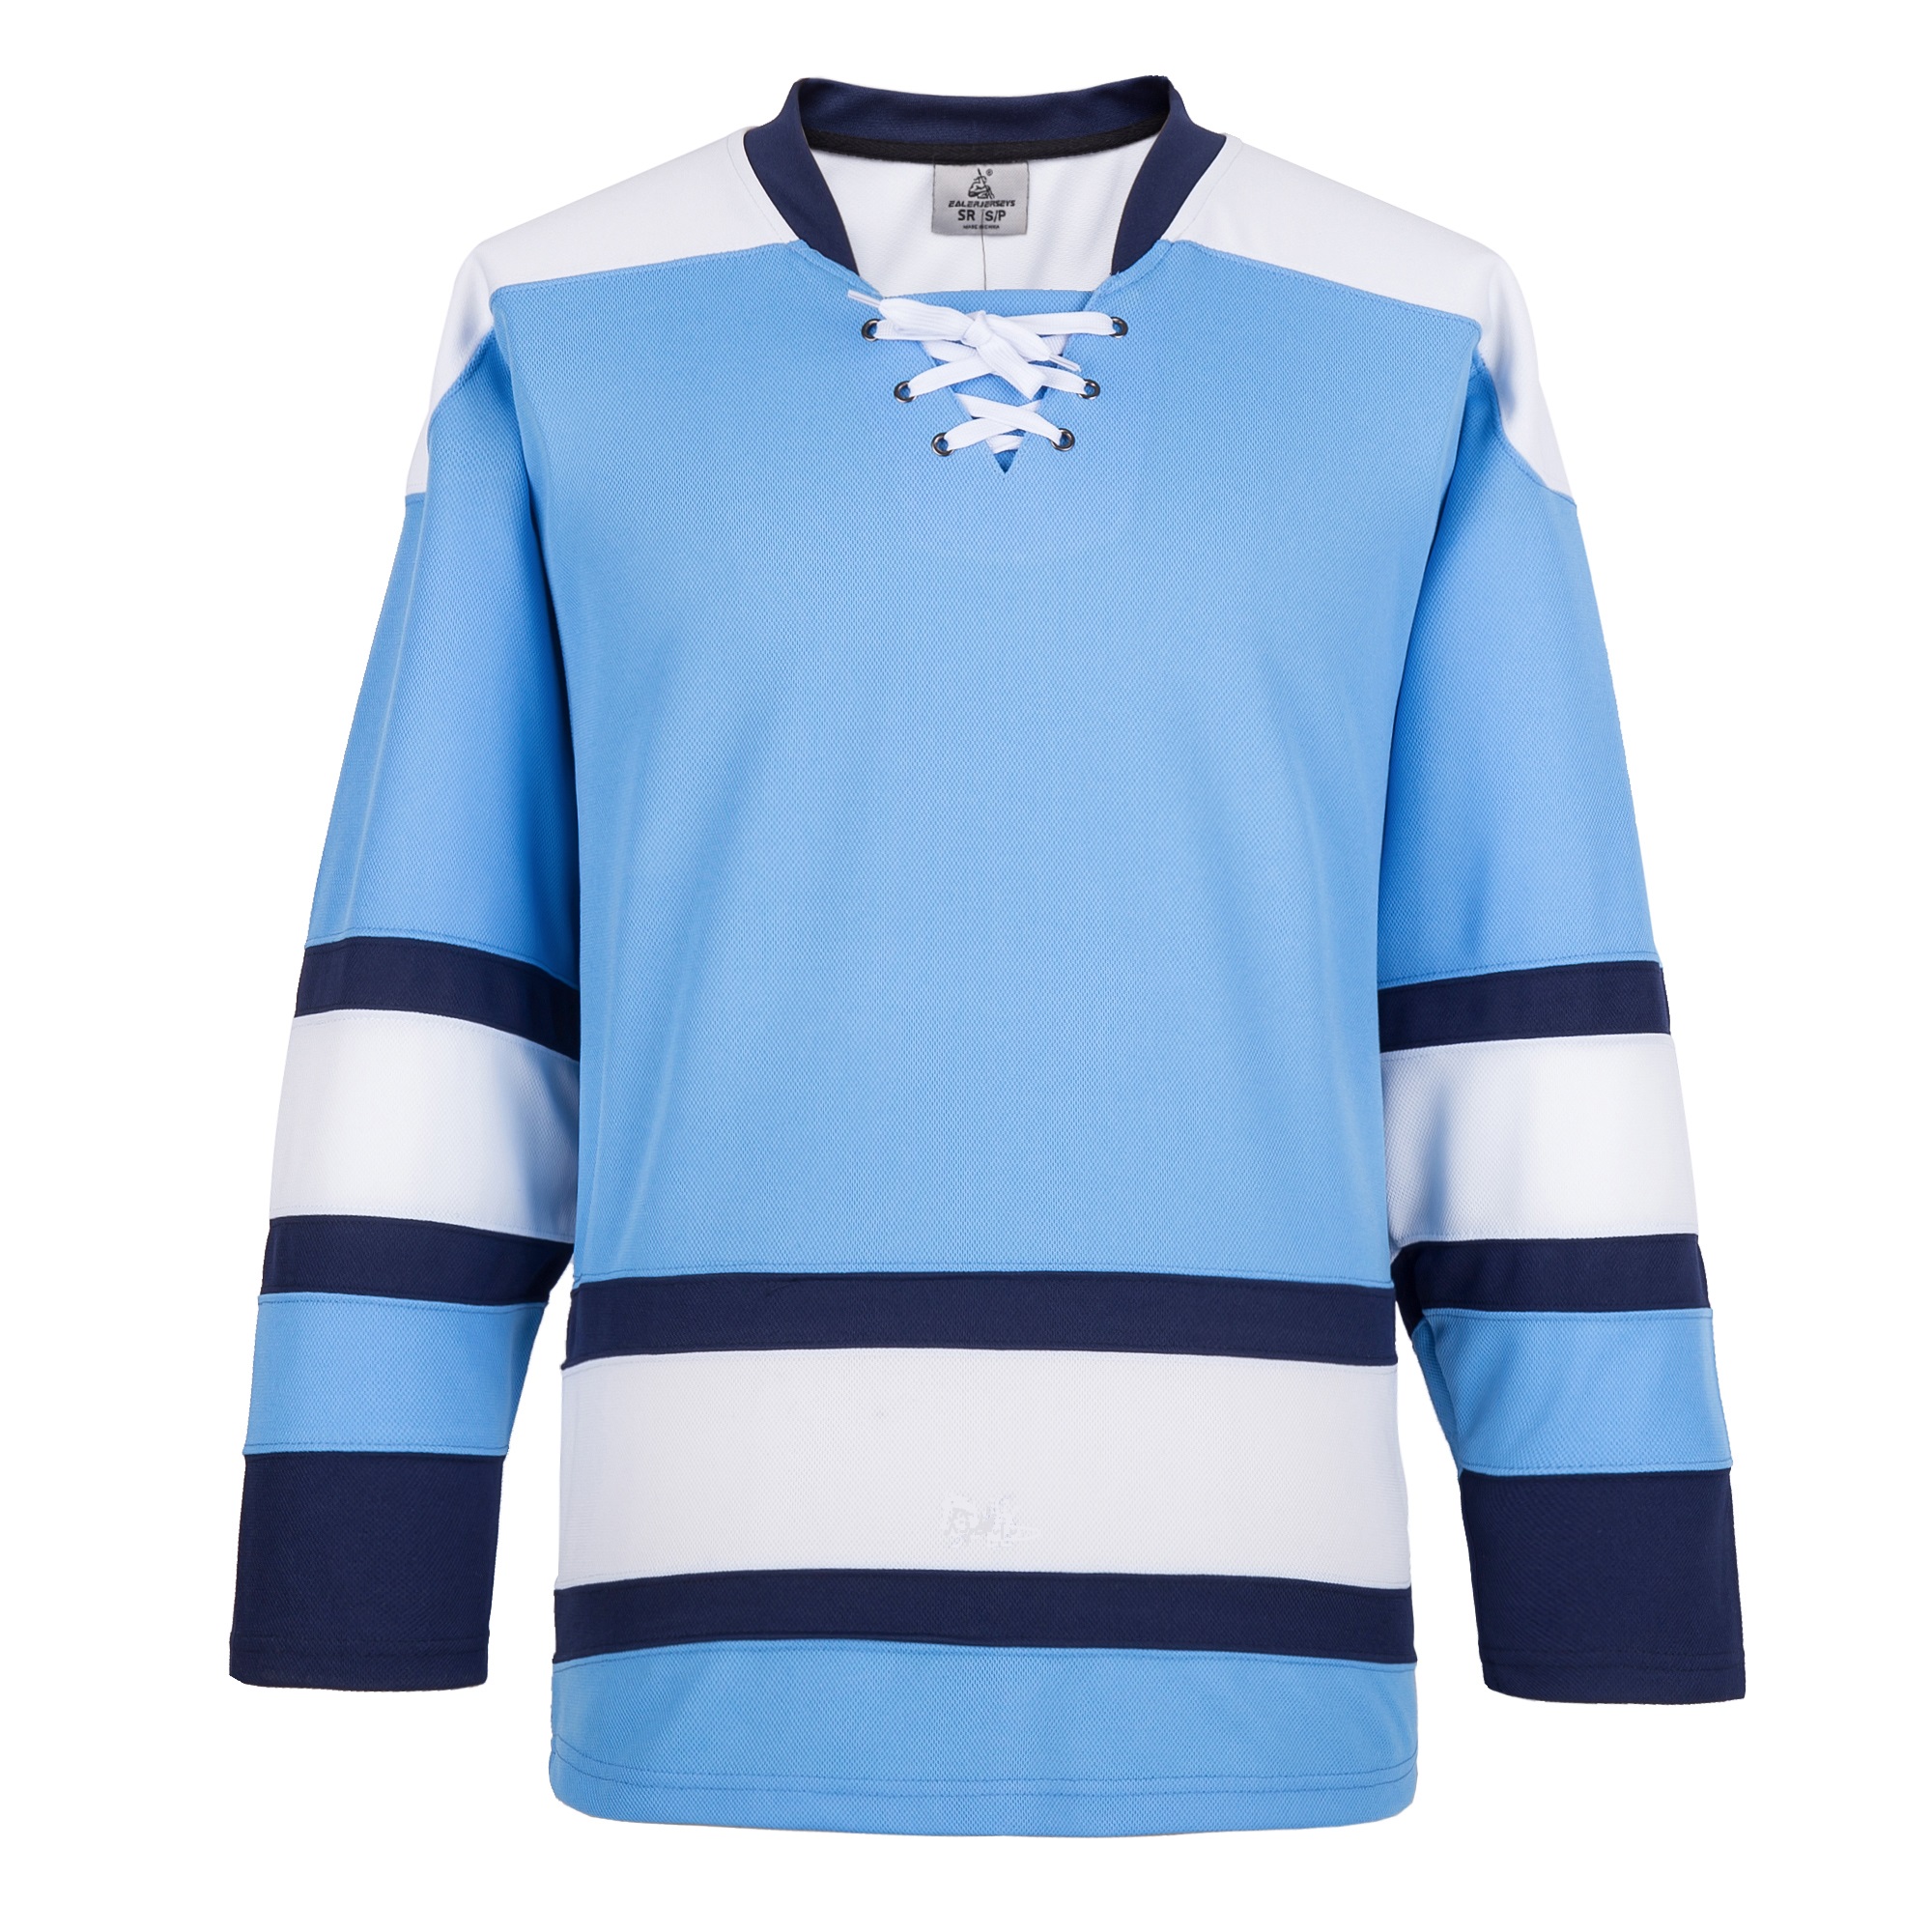 H900-E004 Blue Blank hockey Practice Jerseys